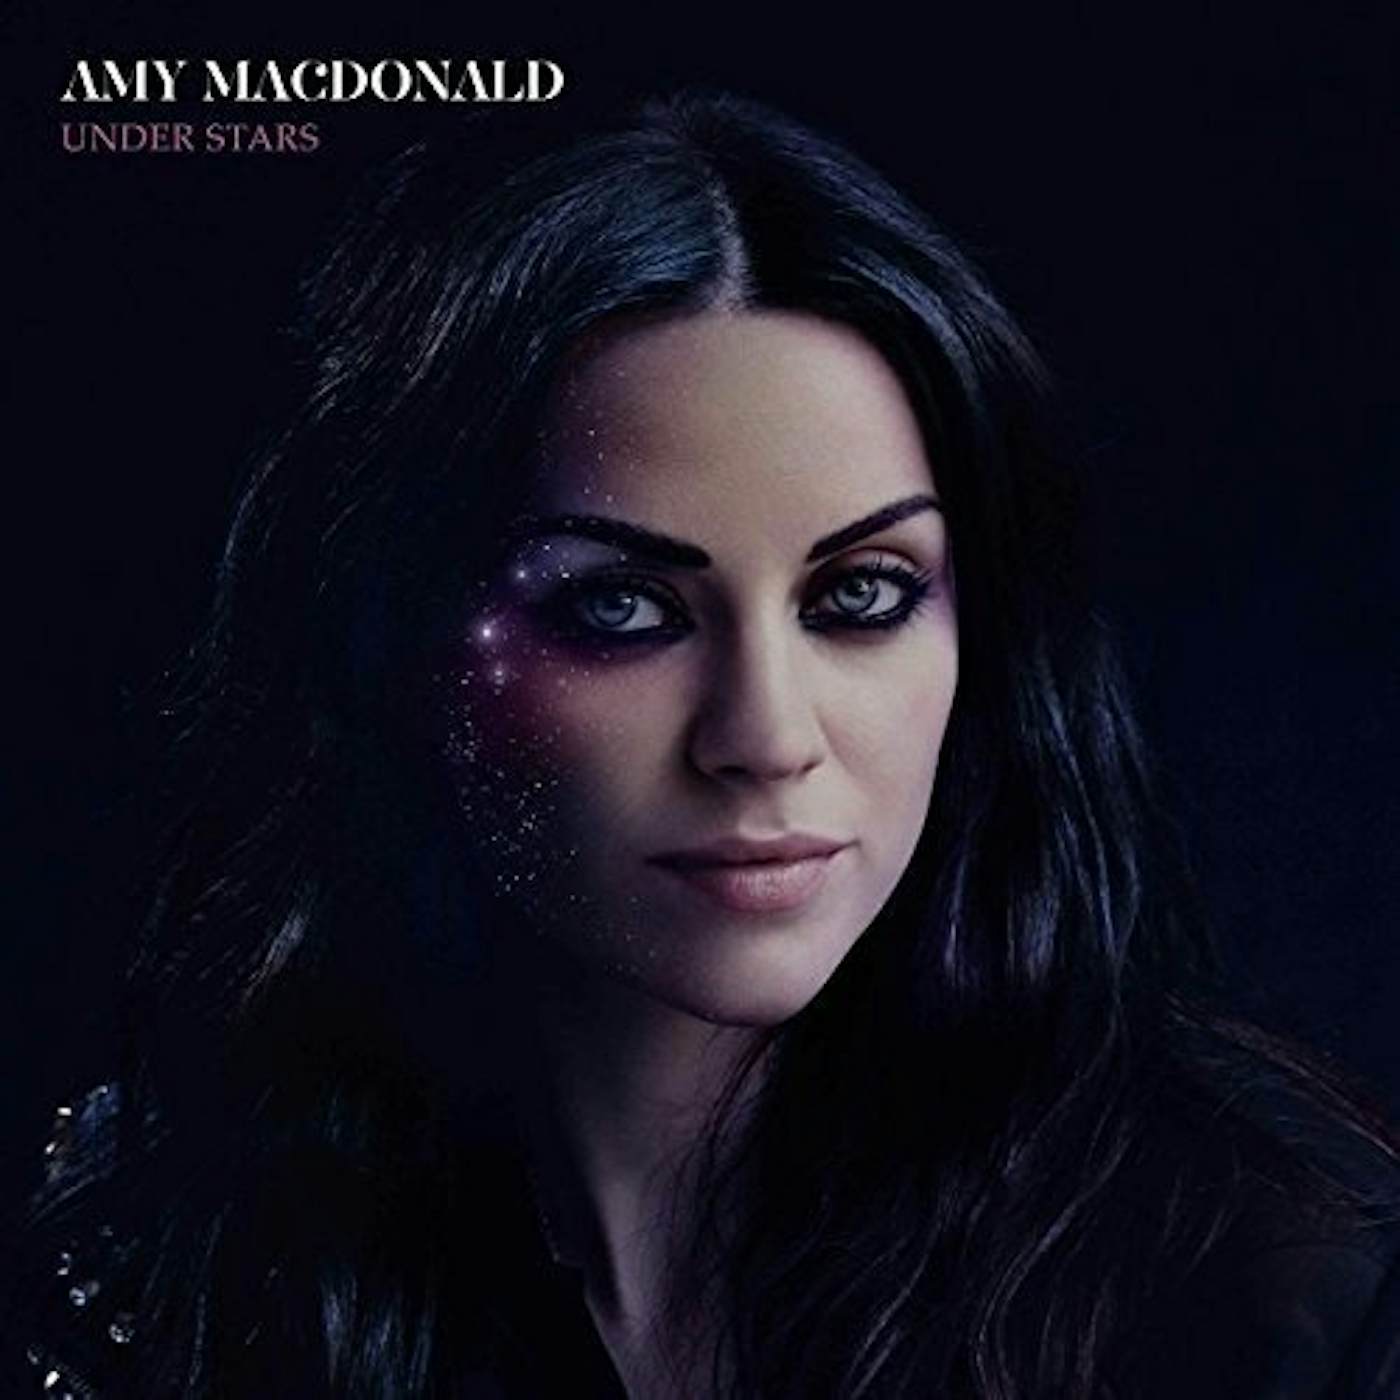 Amy Macdonald Under Stars Vinyl Record